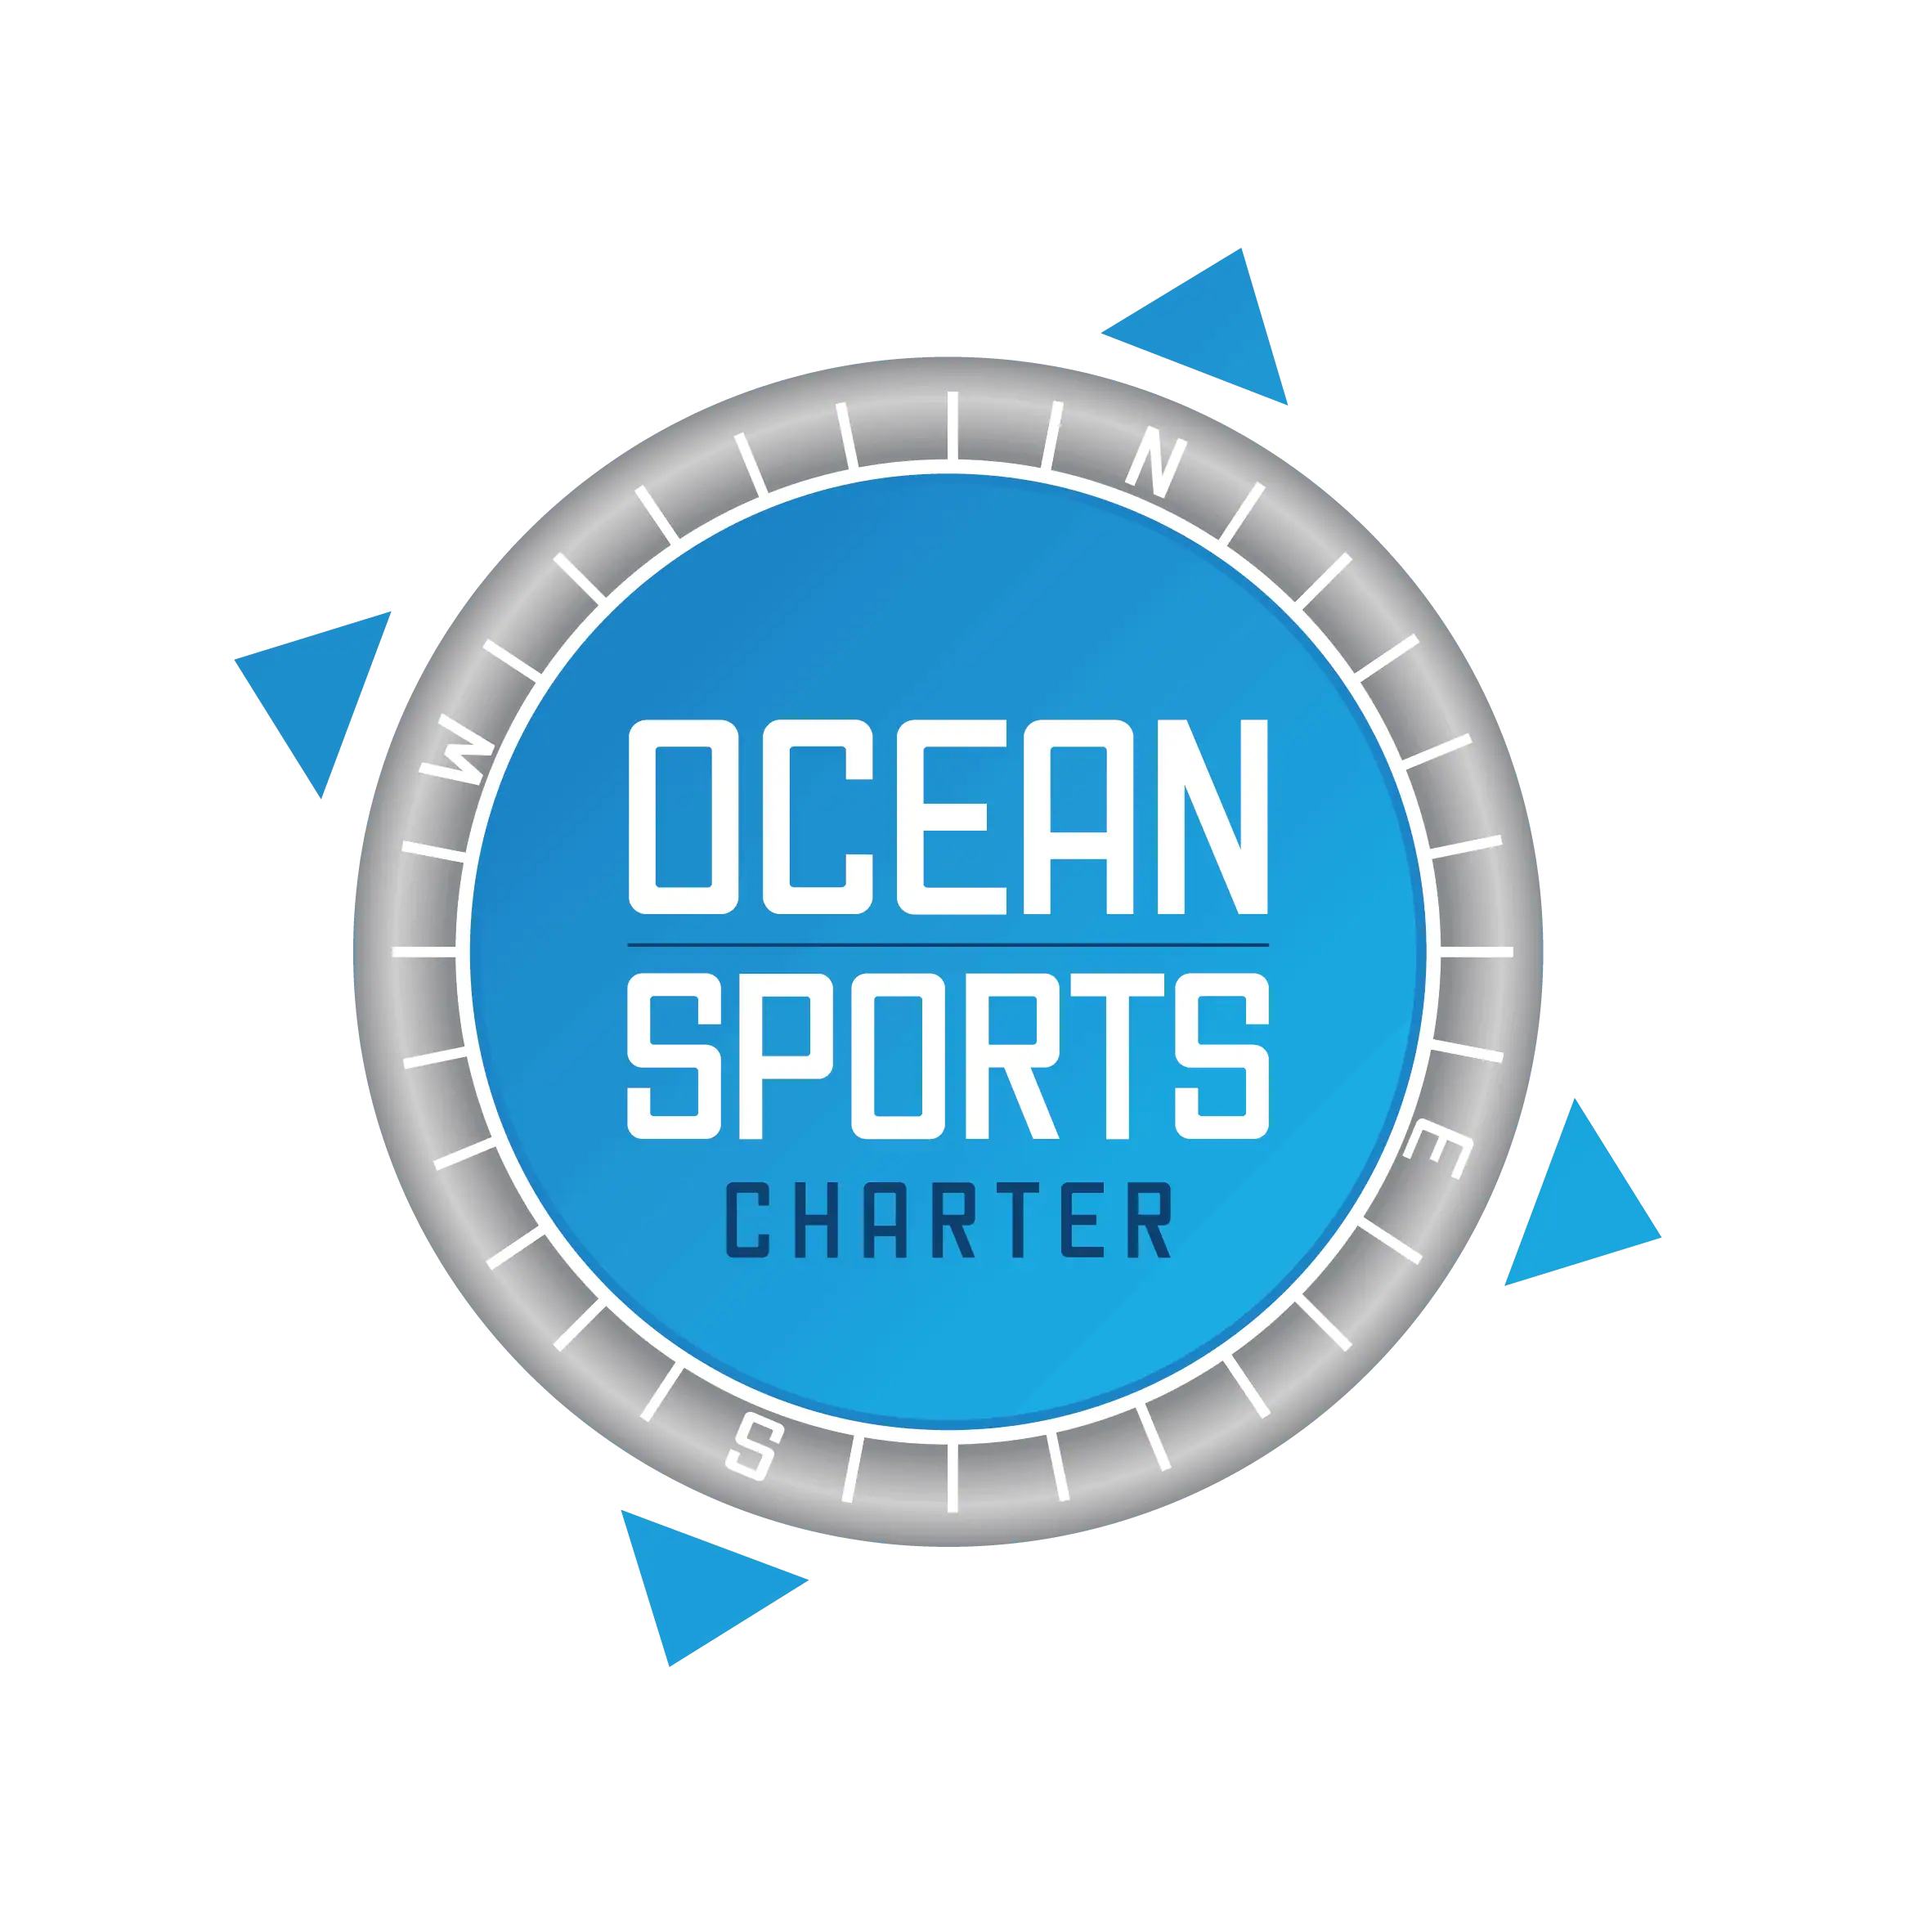 OCEAN-SPORTS-CHARTER-LOGO-01